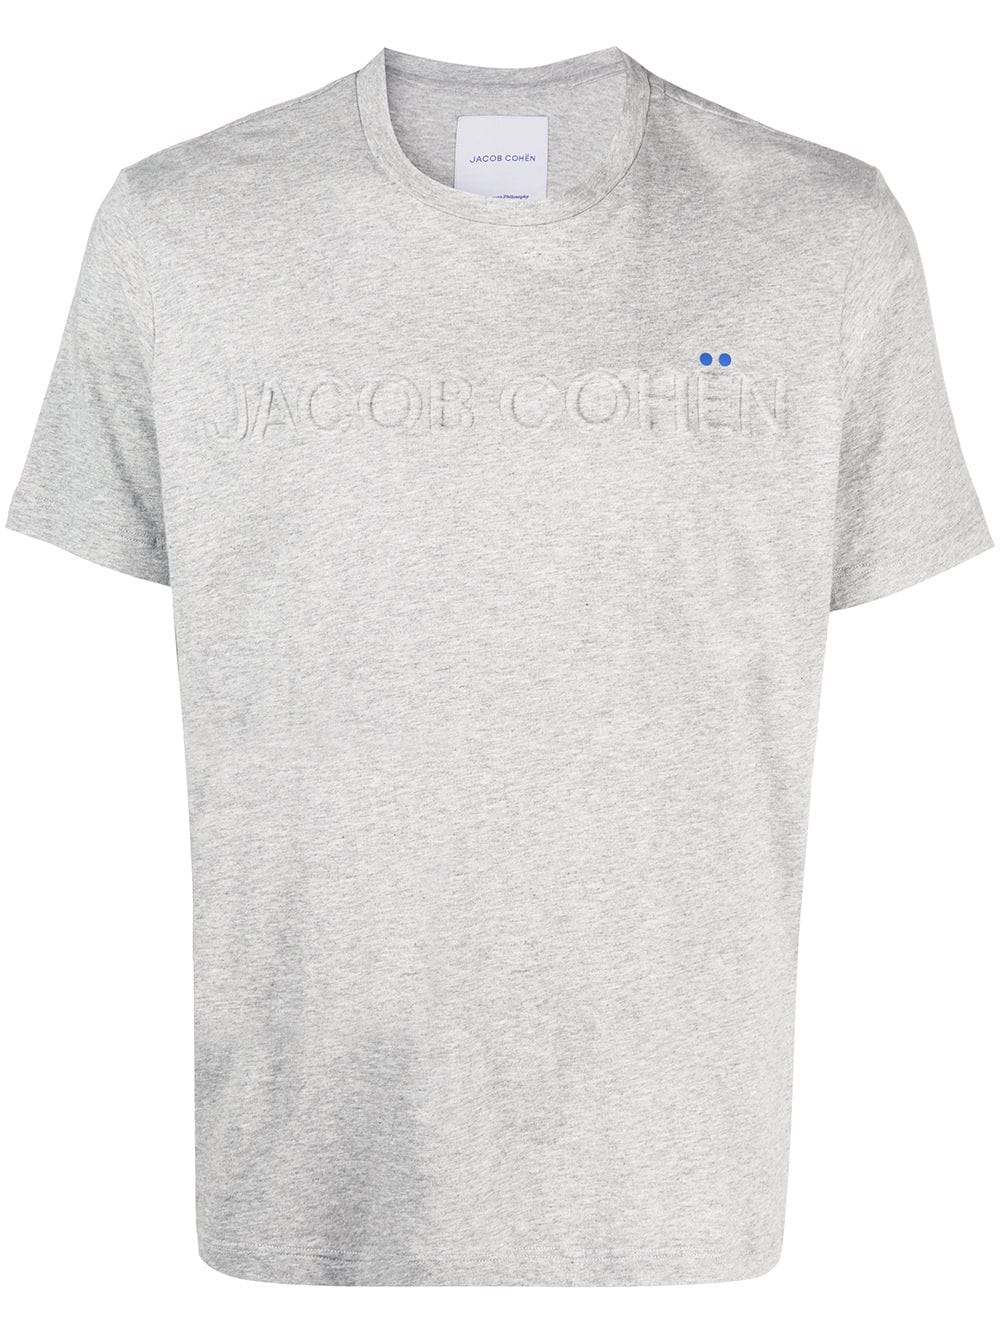 фото Jacob cohen футболка с круглым вырезом и логотипом